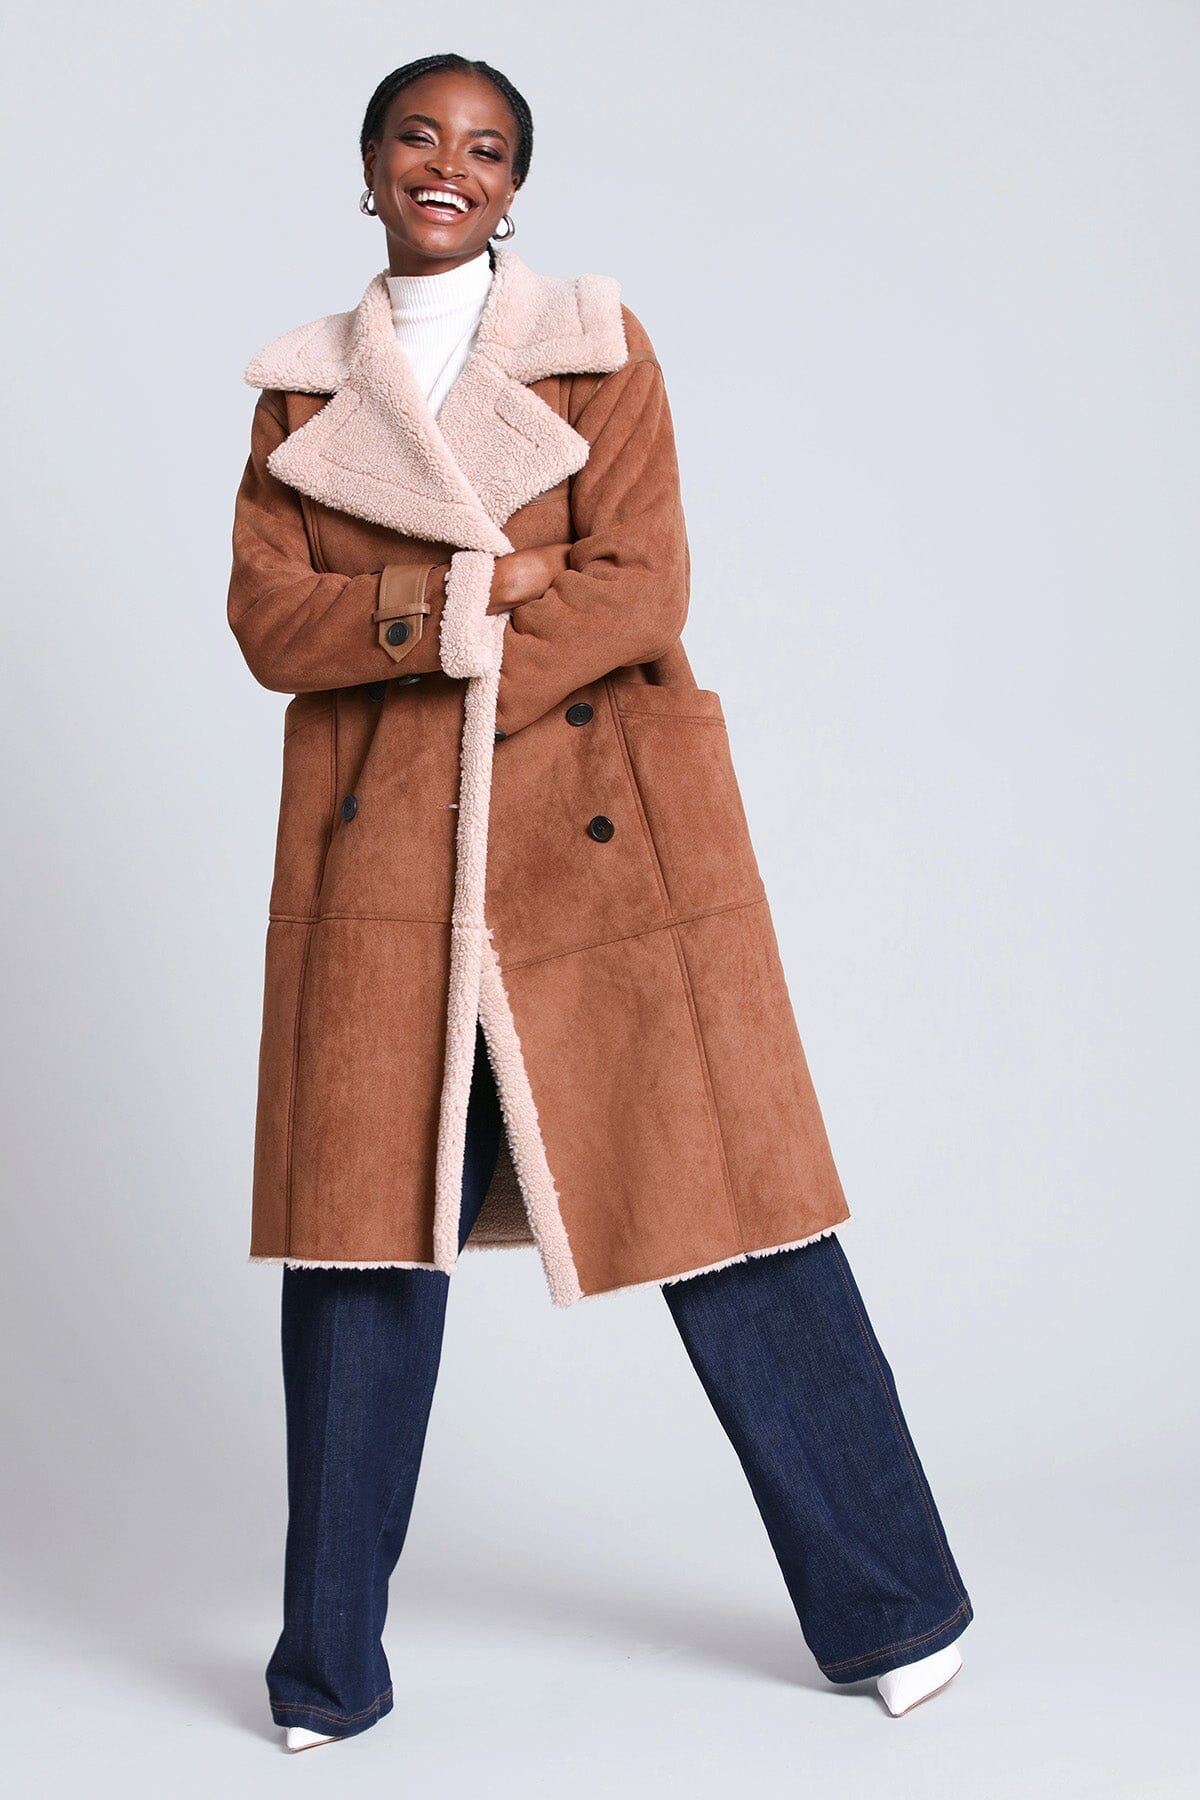 double breasted faux shearling coat outerwear fawn brown - women's figure flattering long cute fall coats